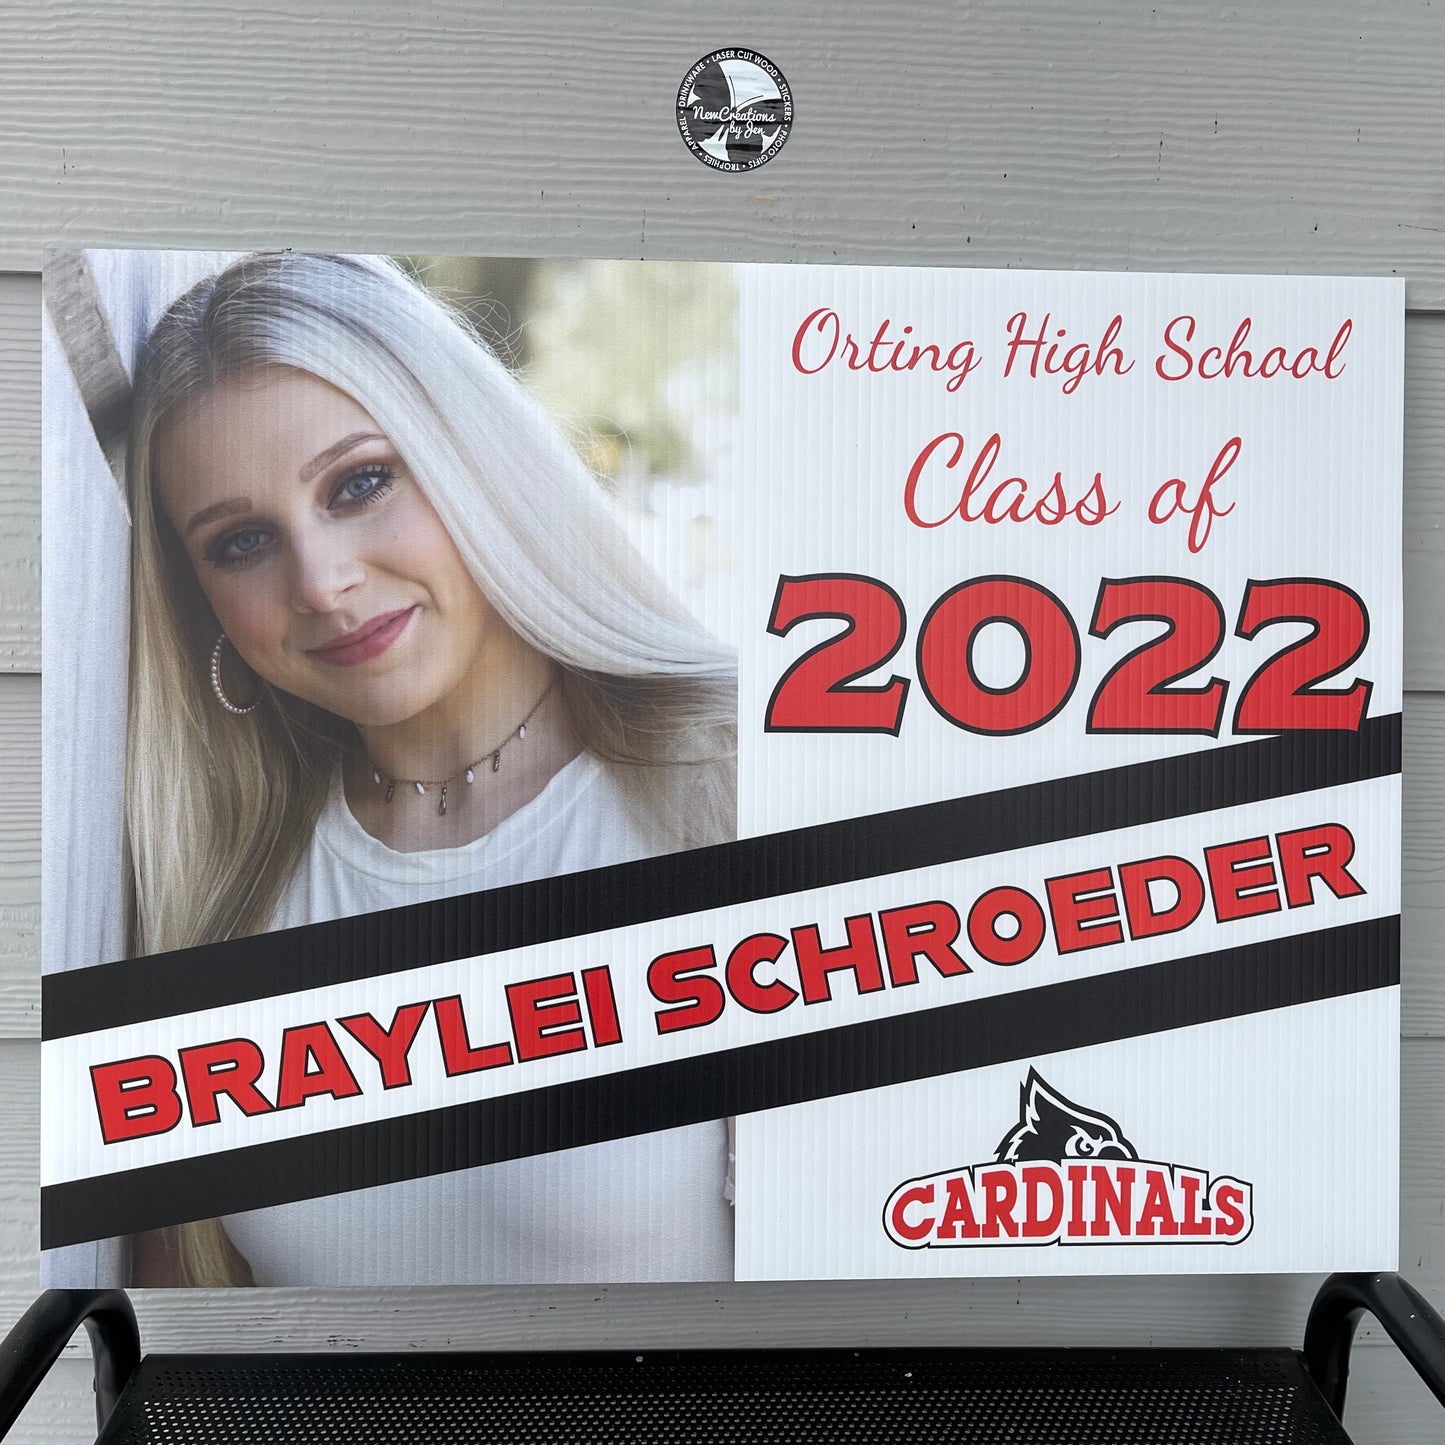 2024 Senior Photo Yard Sign - 24 x 18 Full Color